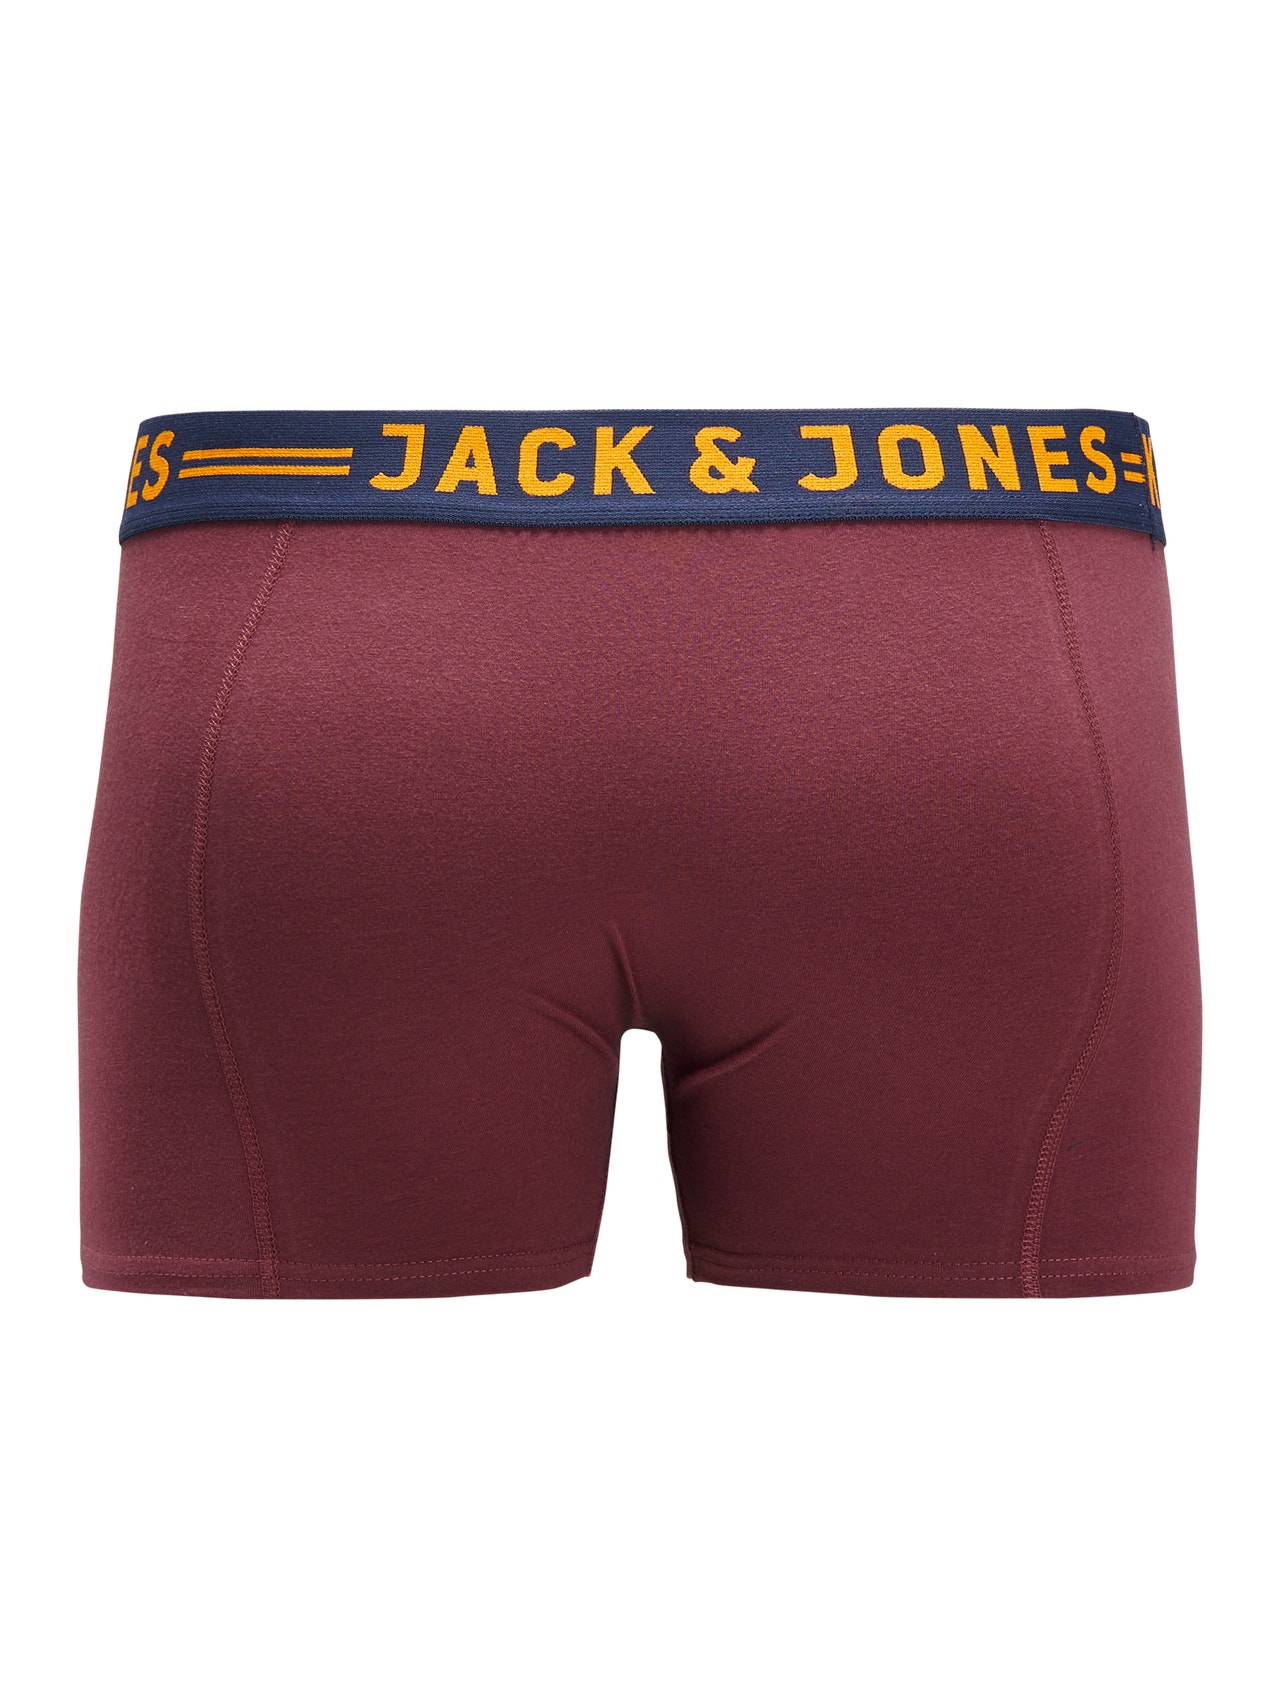 Jack & Jones Plus Size Pack de 3 Boxers -Burgundy - 12147592